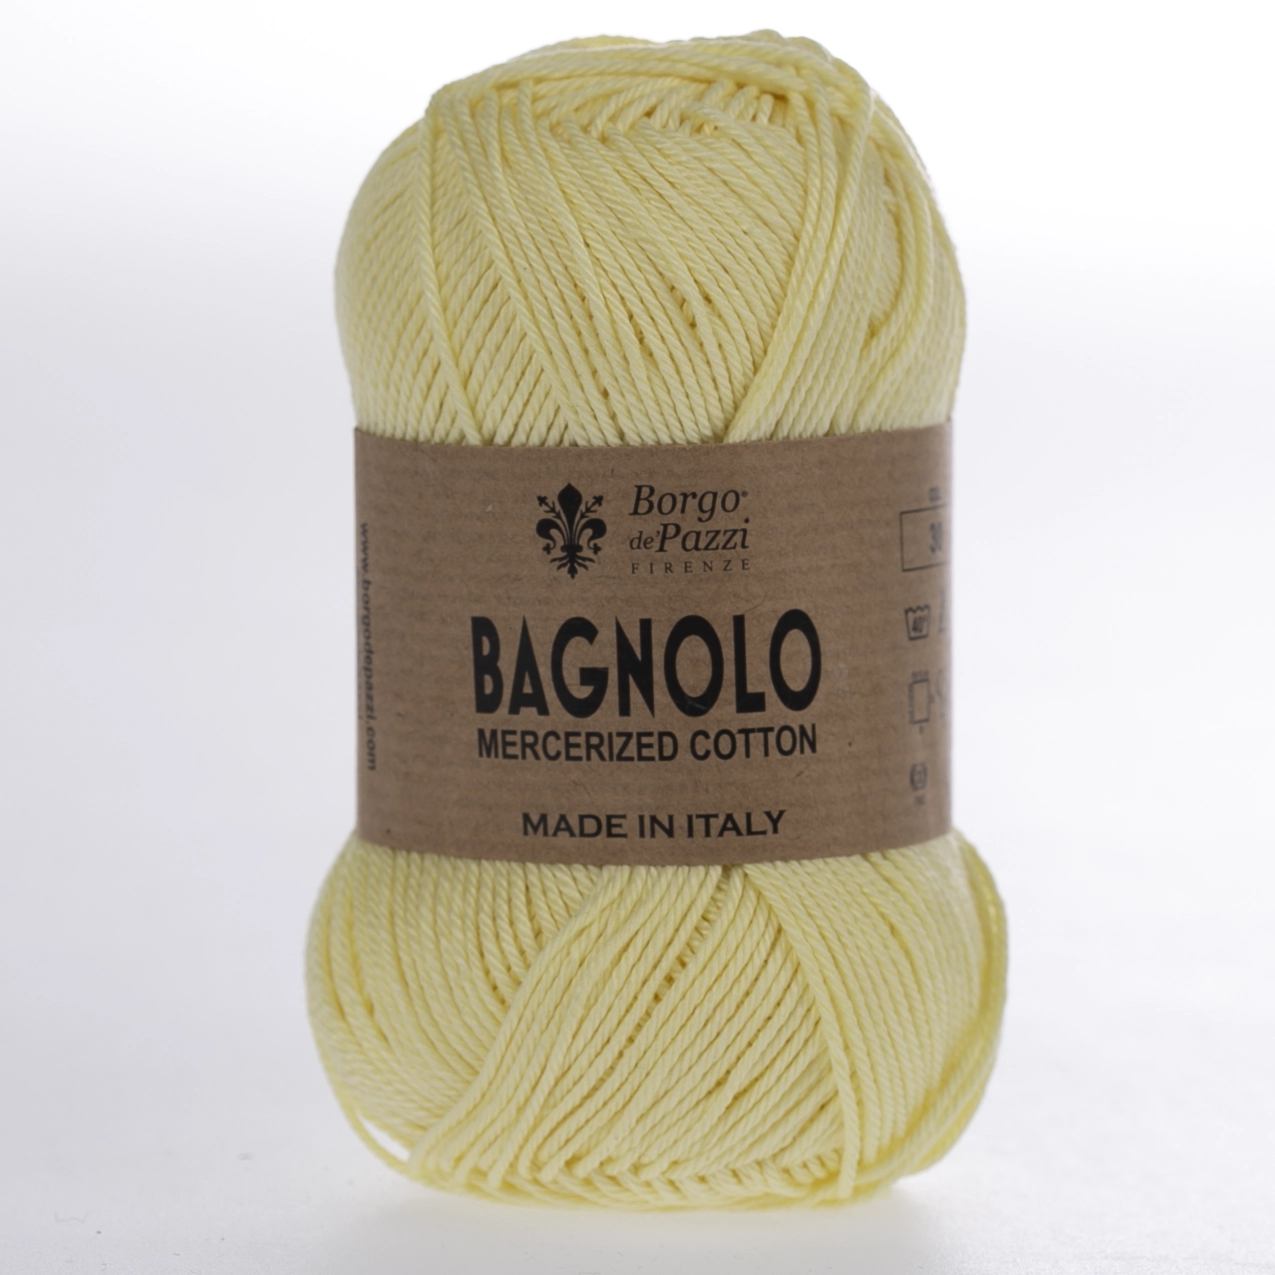 BAGNOLO Borgo de' Pazzi - 30 giallo chiaro